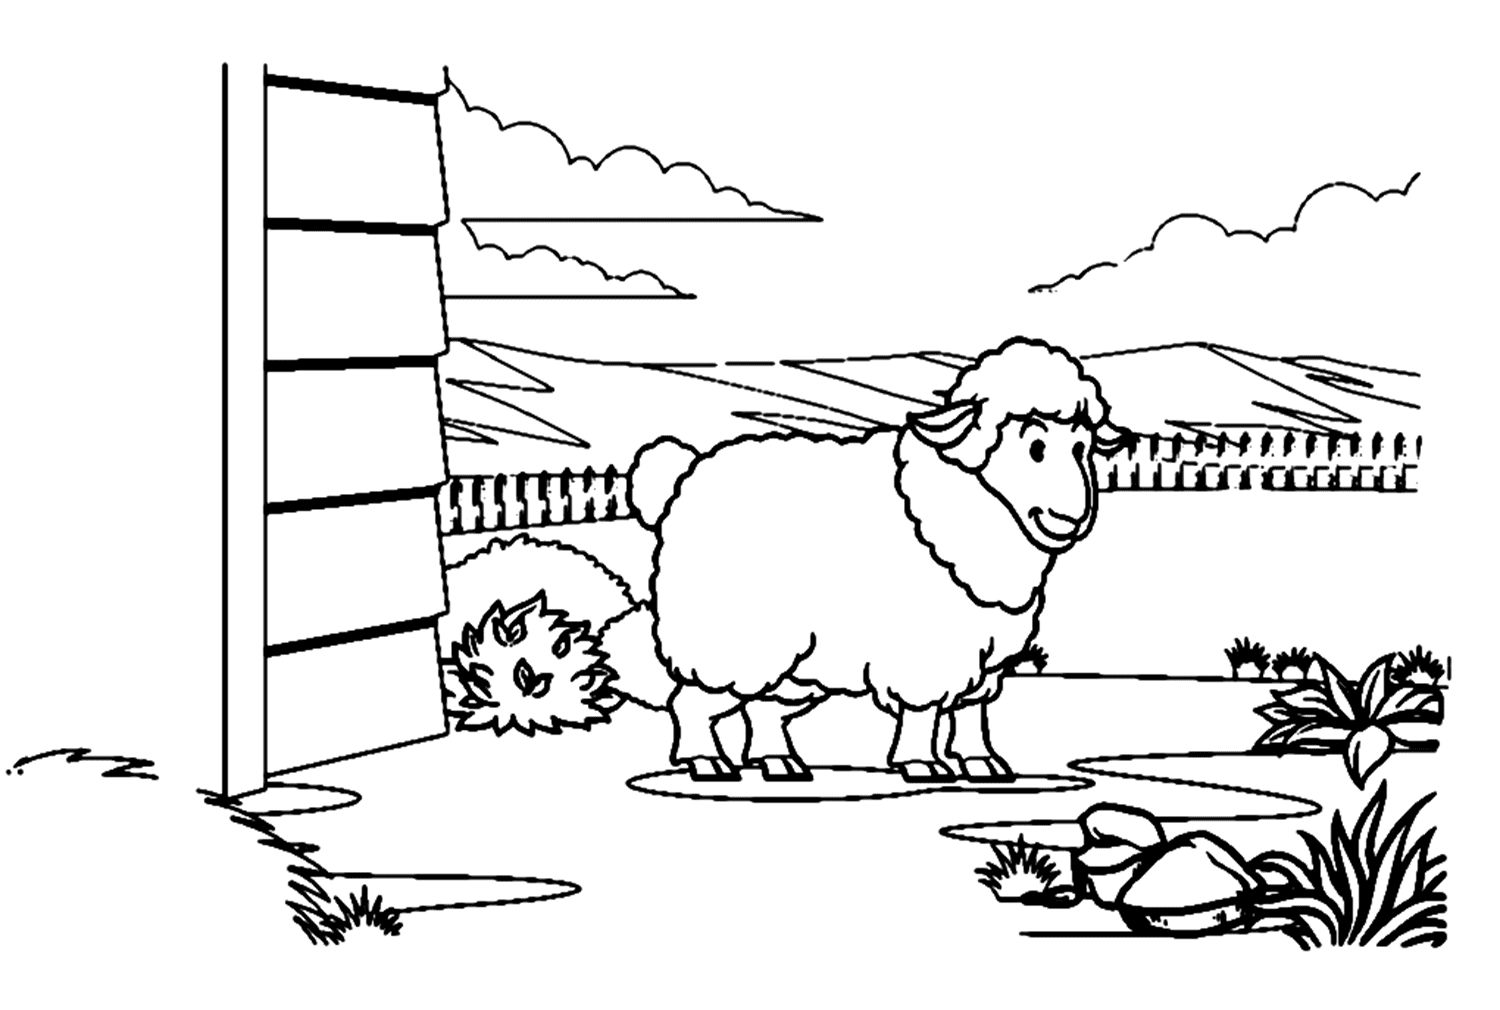 Lamb In The Barn from Lamb